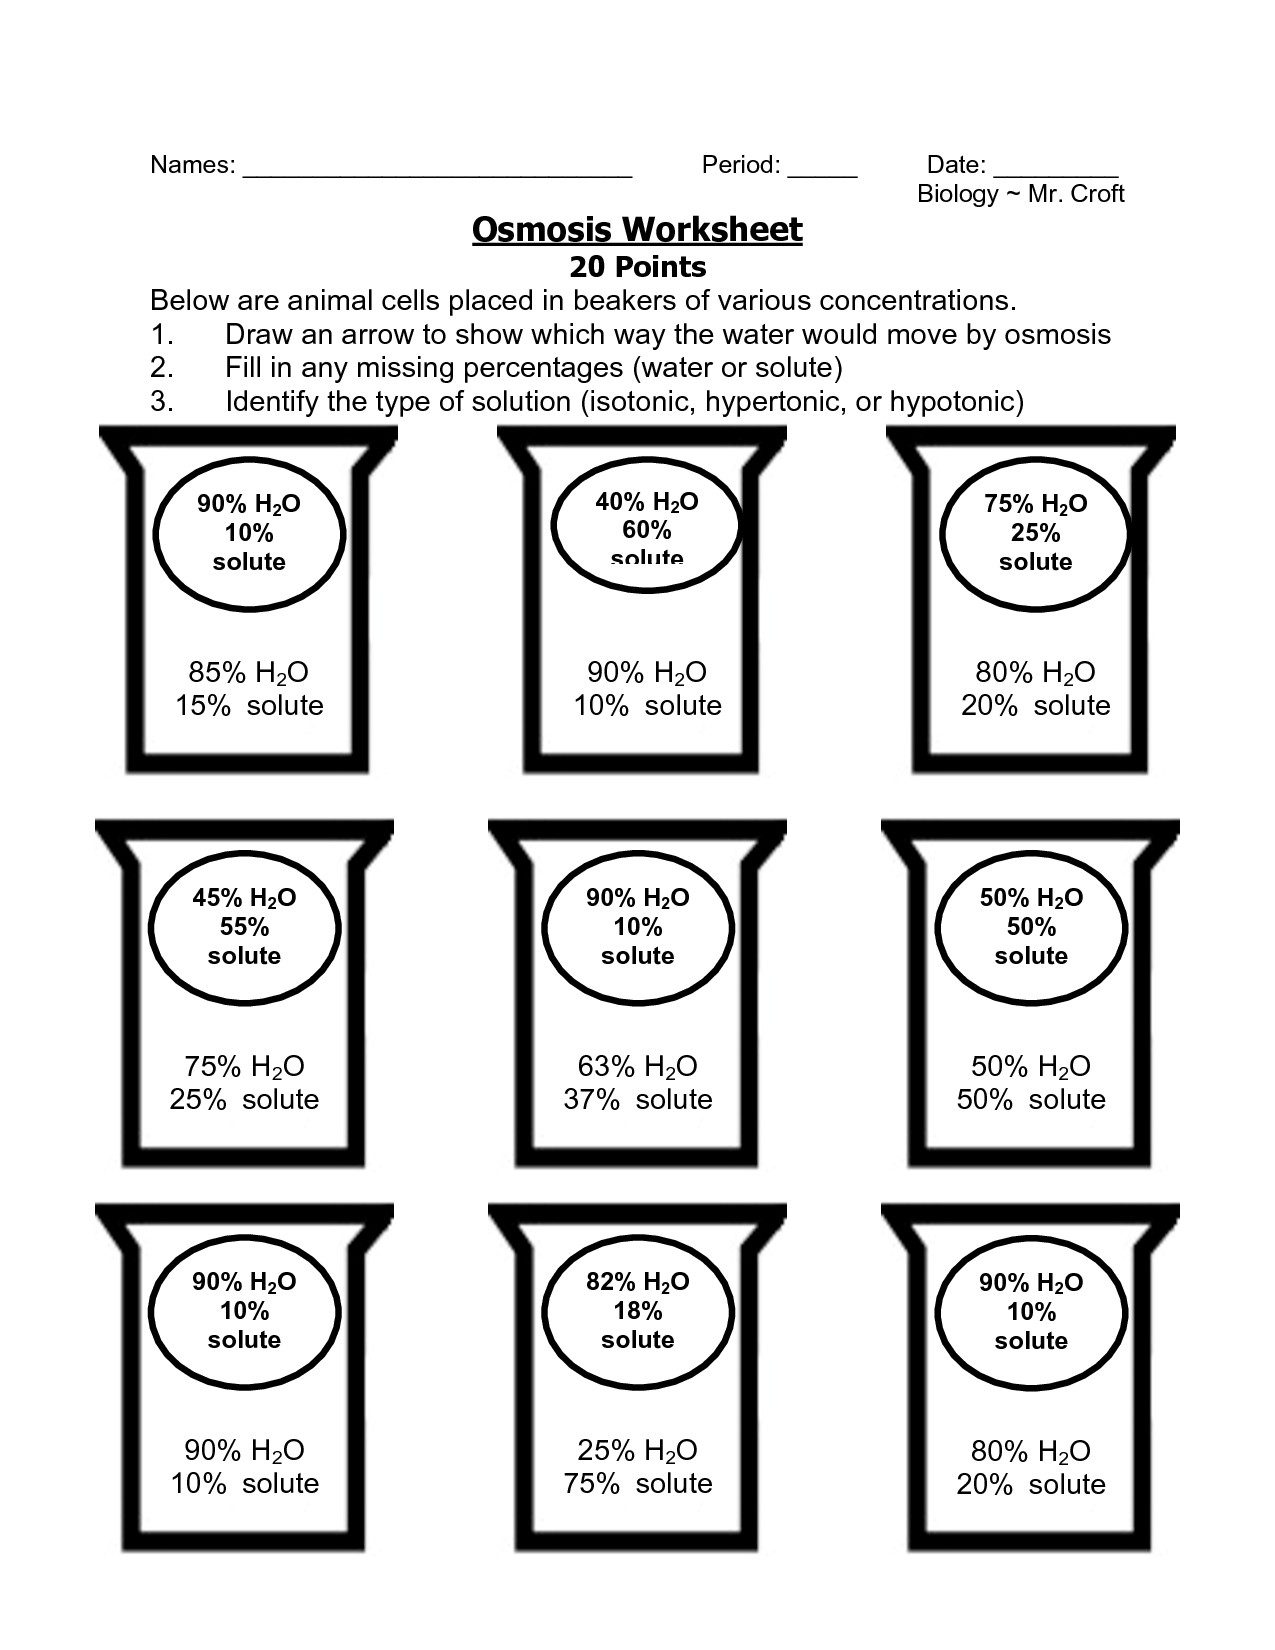 Osmosis Worksheet Answers Key